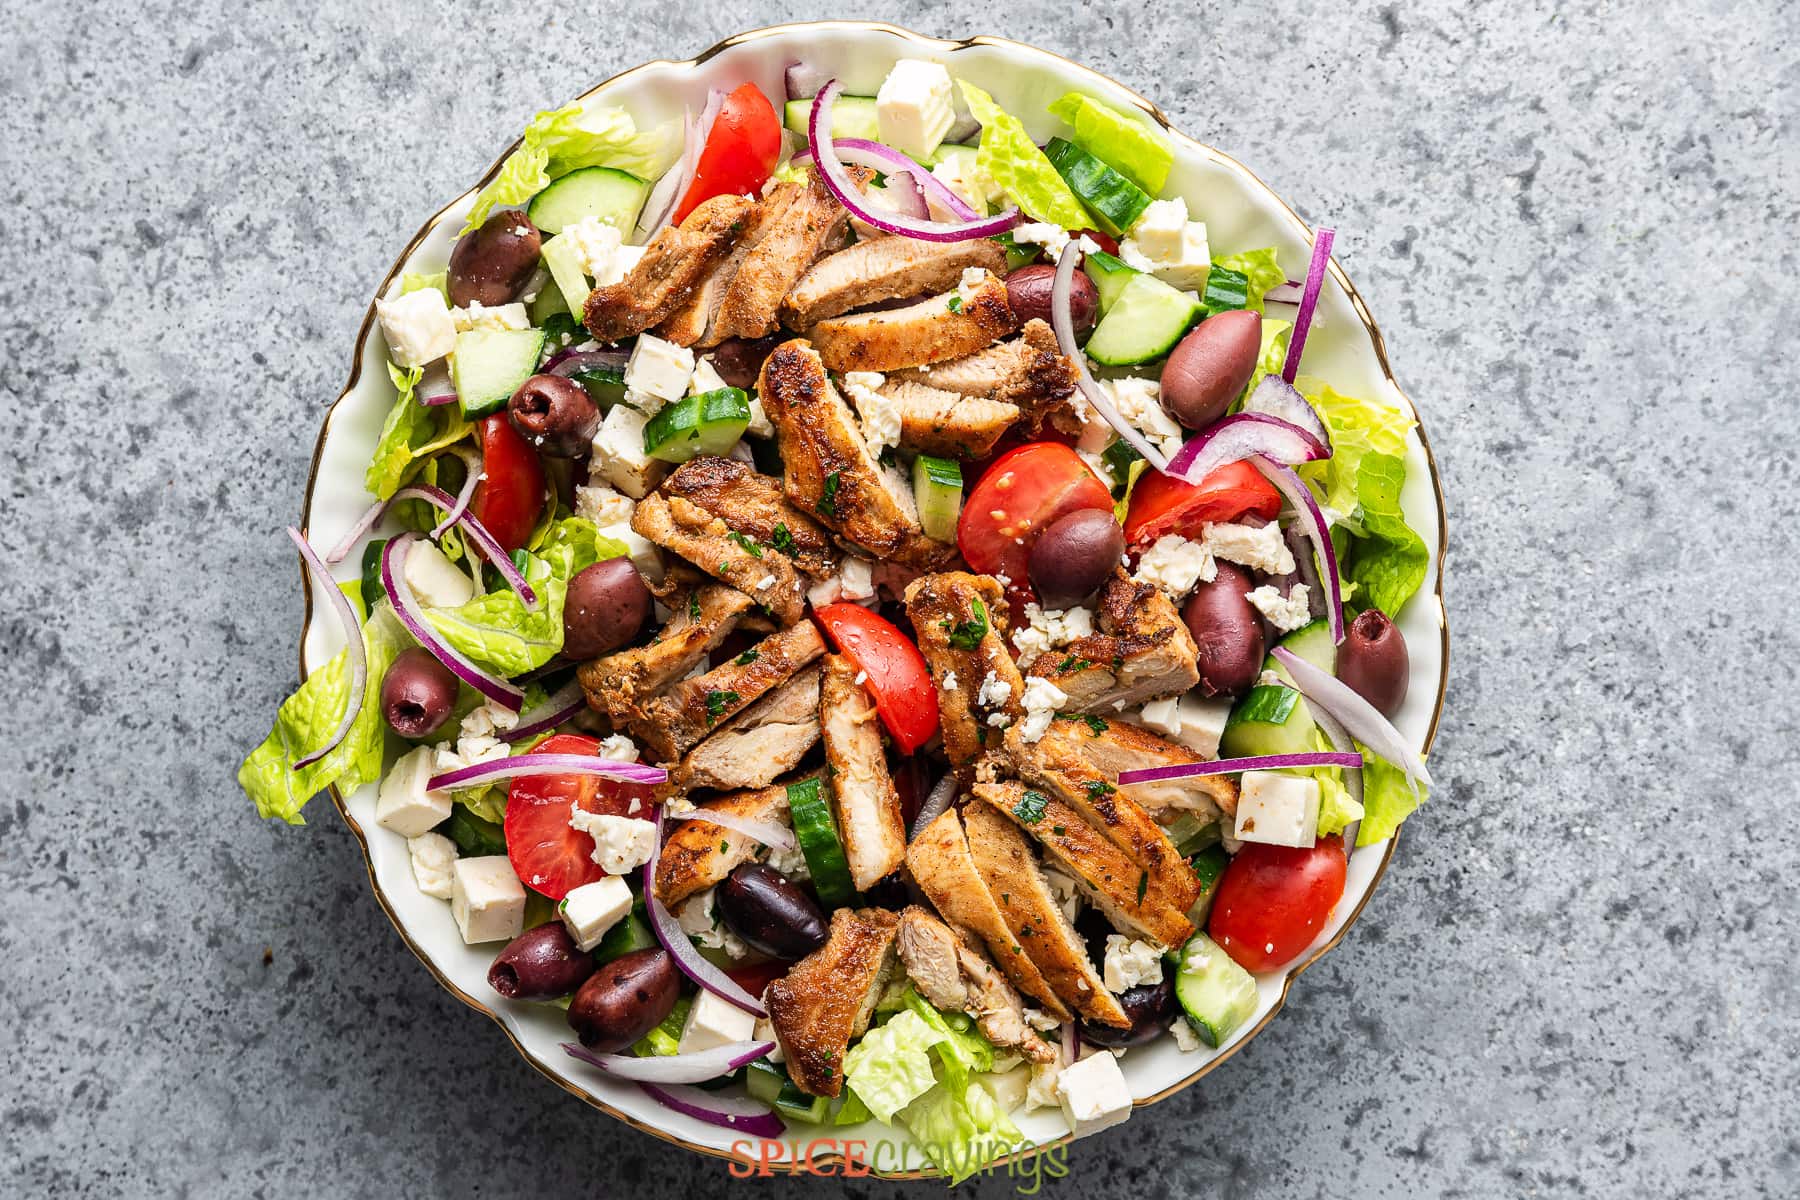 https://spicecravings.com/wp-content/uploads/2022/04/greek-chicken-salad-27-LS.jpg